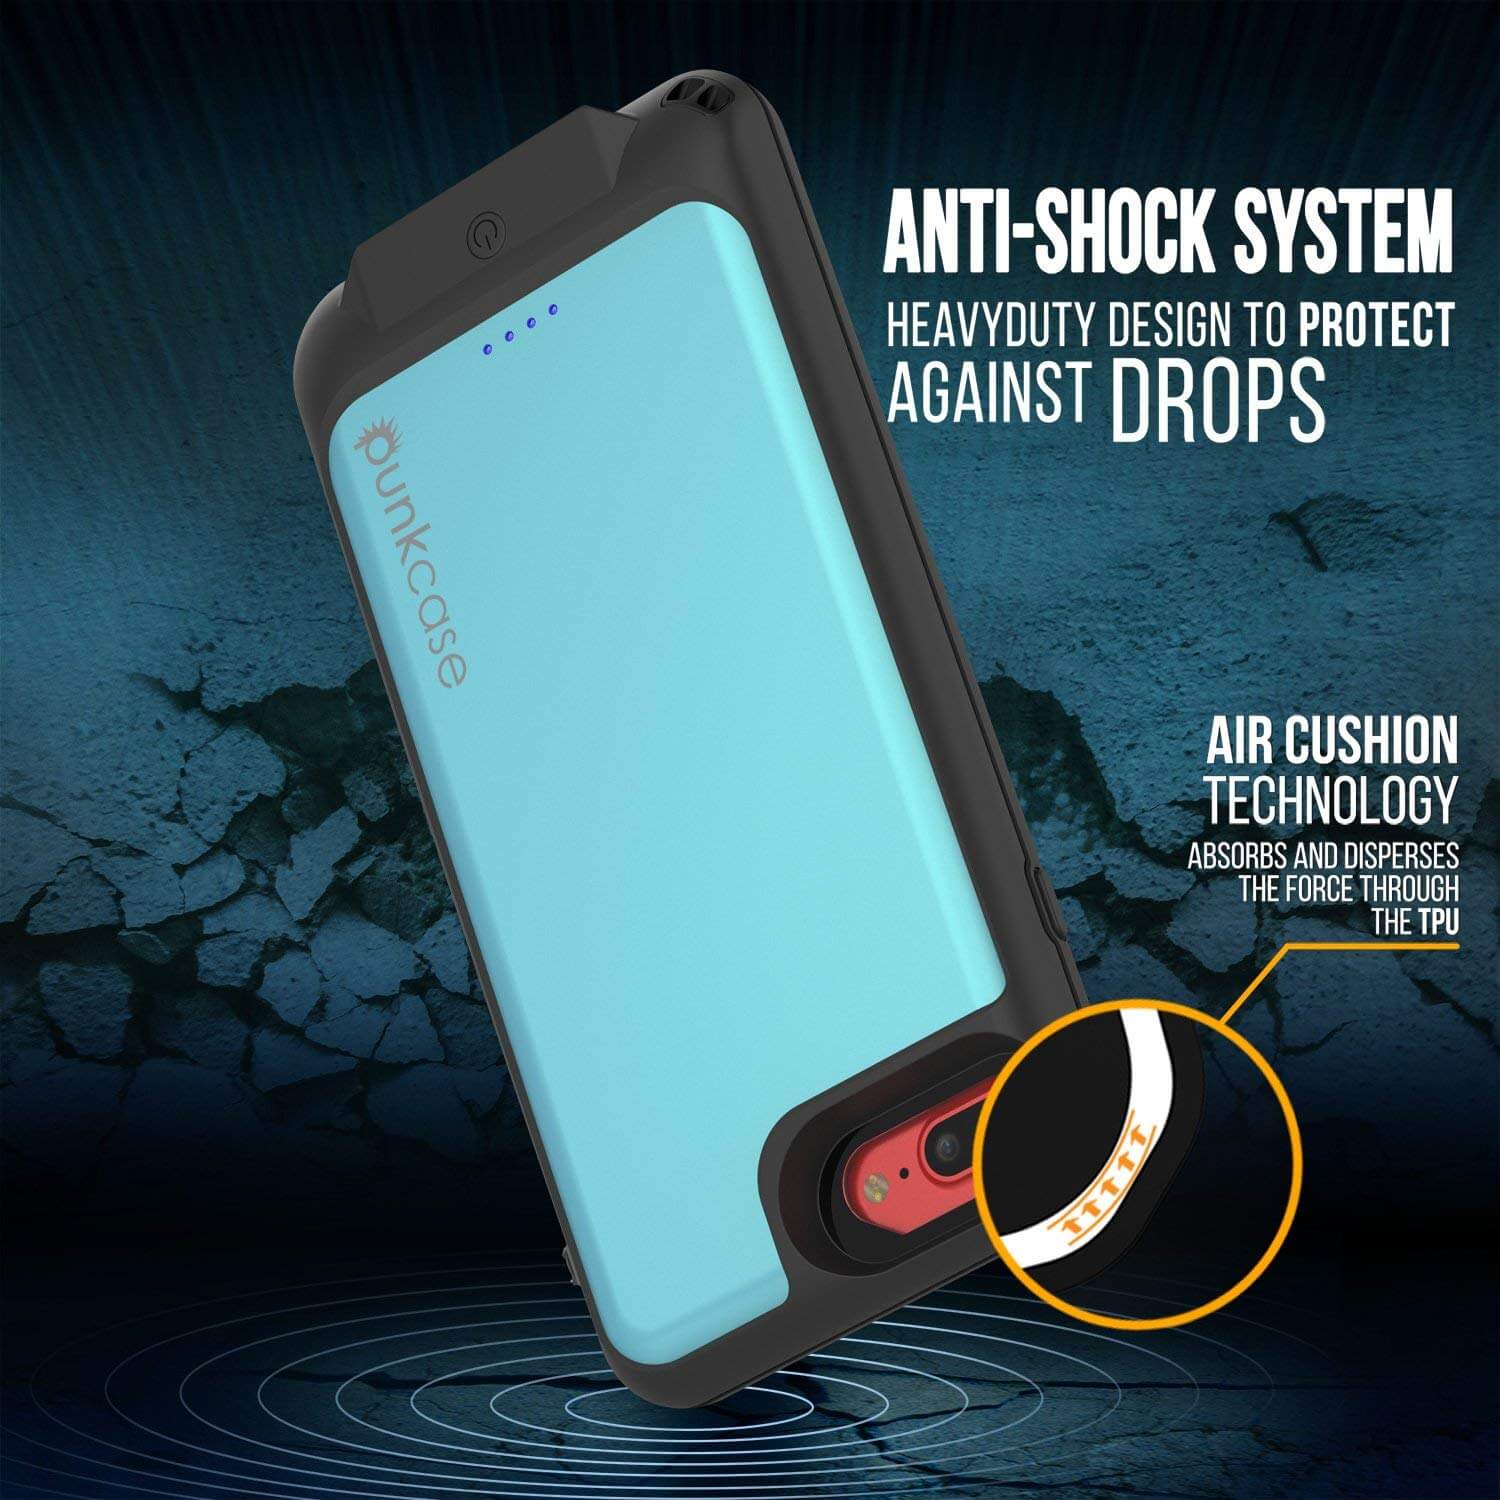 PunkJuice iPhone 7+ Plus Battery Case Teal - Waterproof Slim Power Juice Bank with 4300mAh